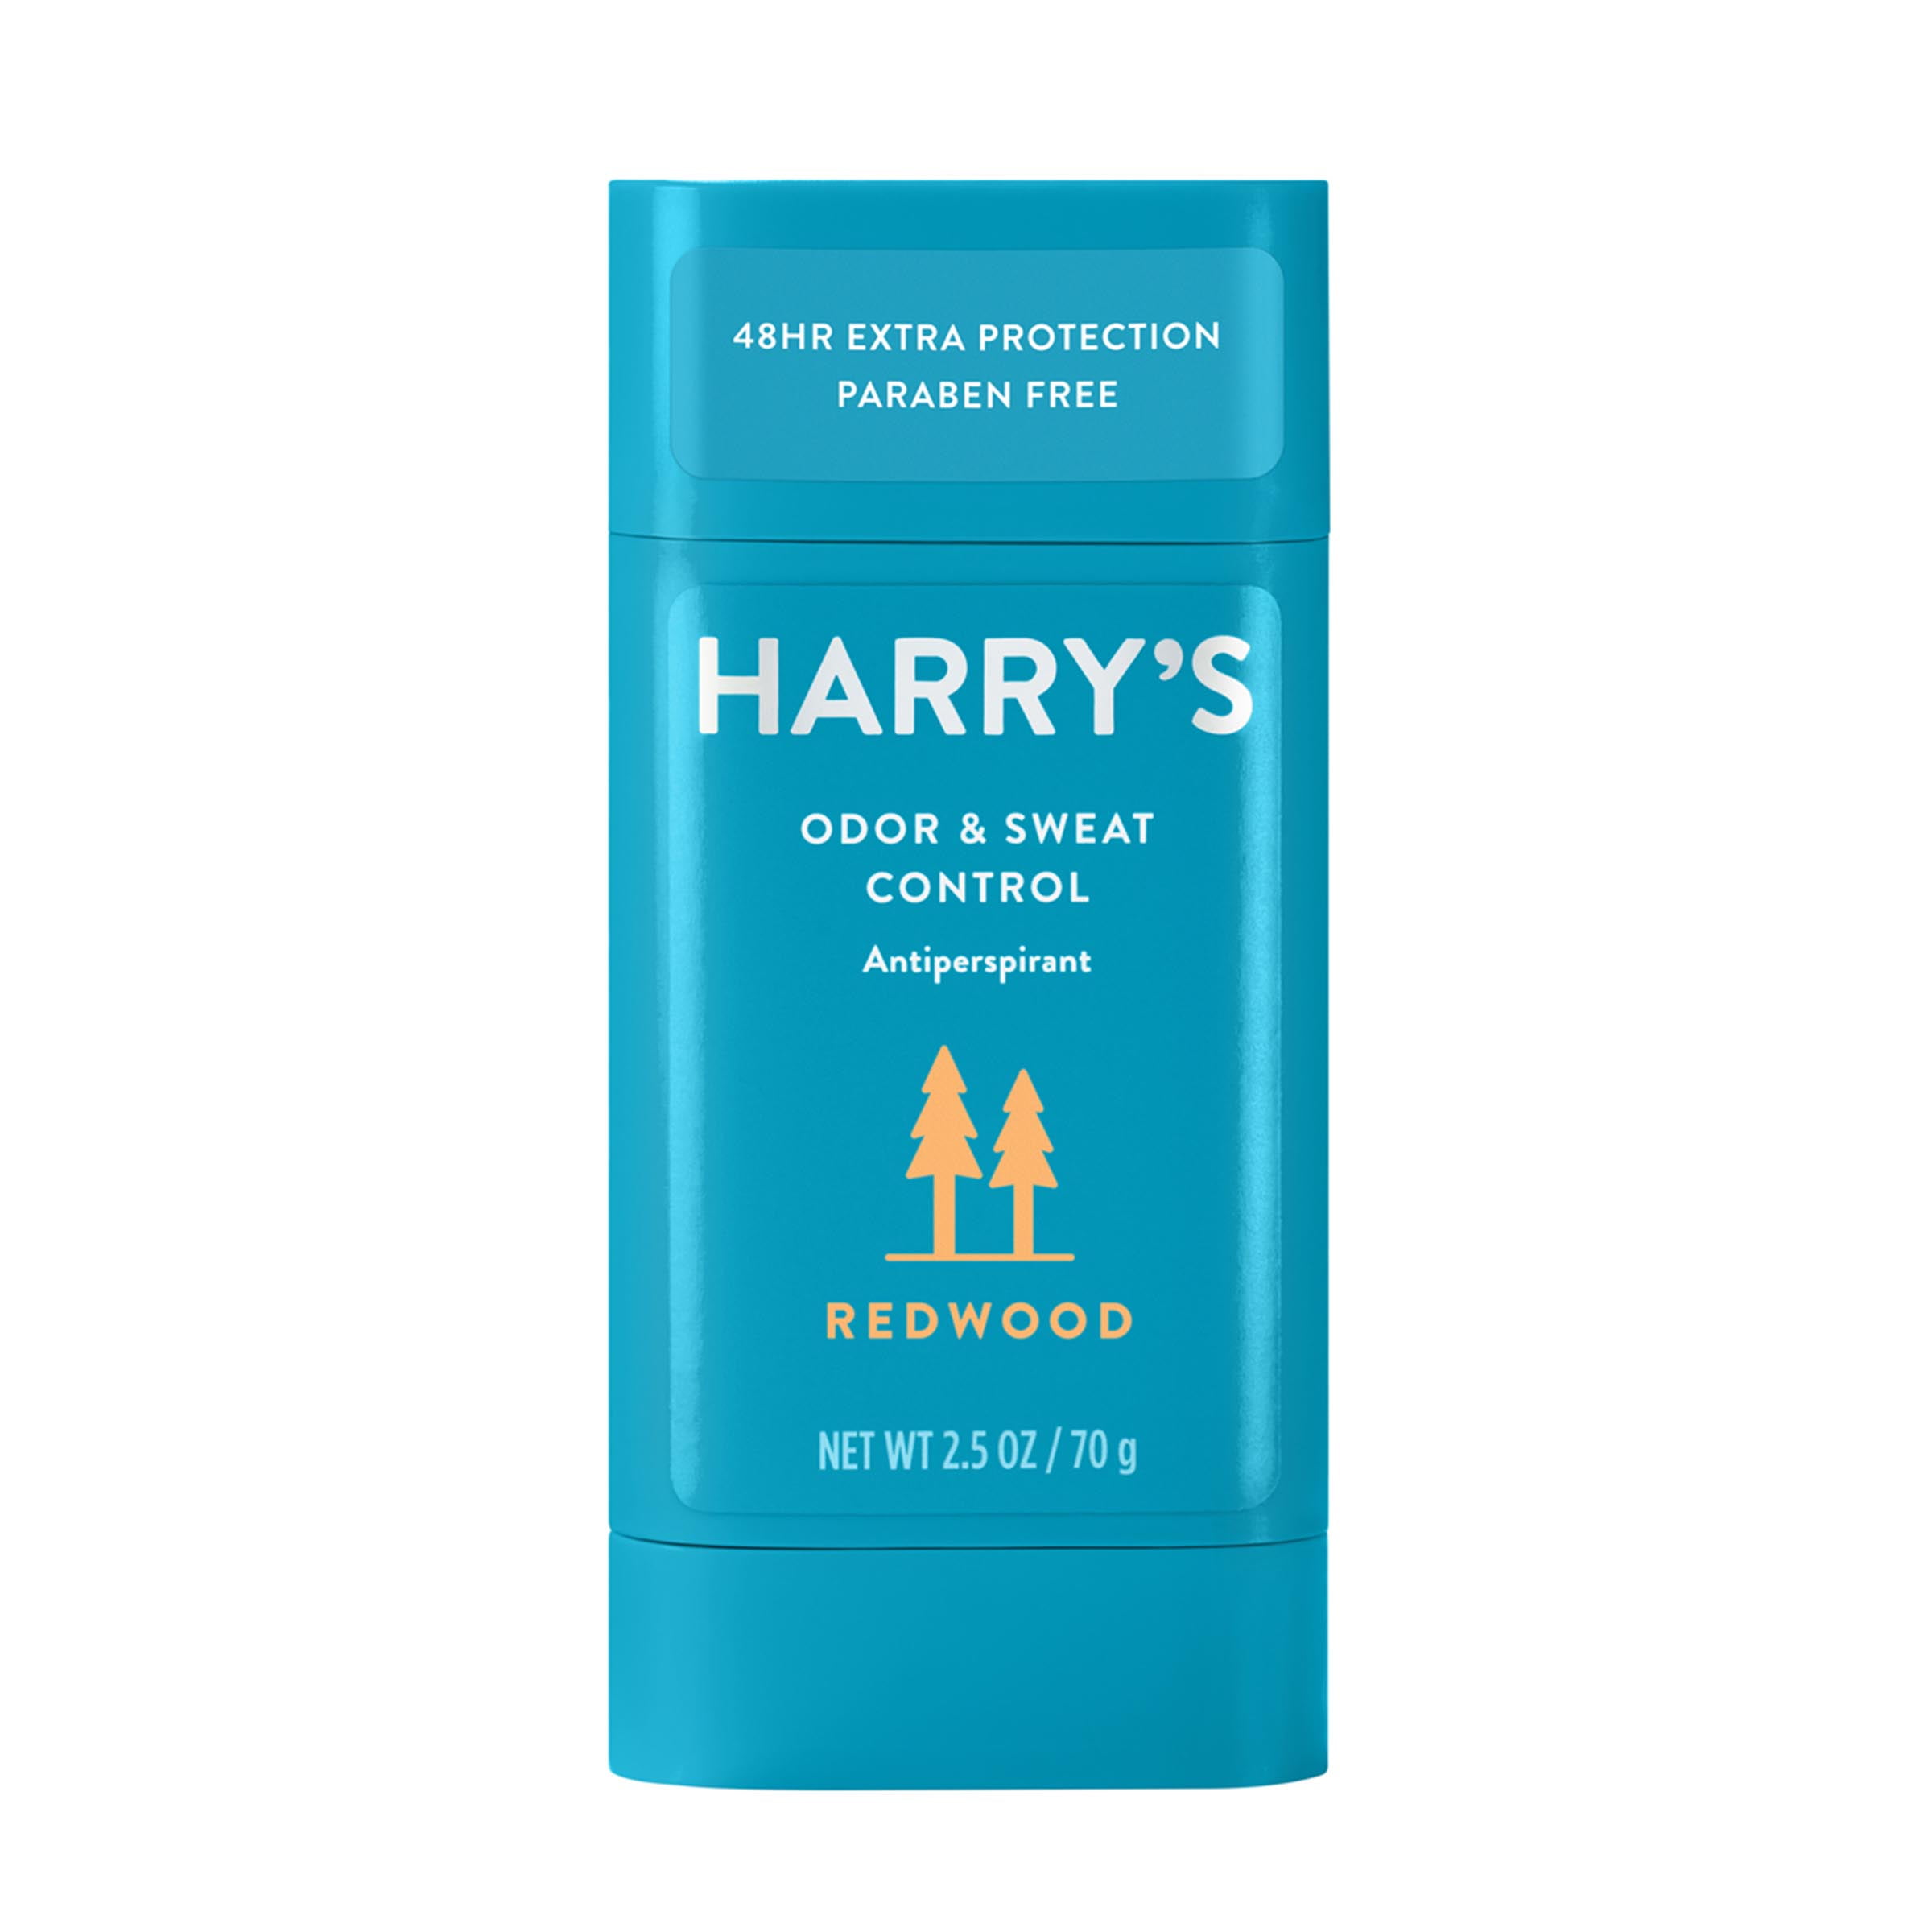 Harry's Men's Odor and Sweat Control Antiperspirant Deodorant Stick, Redwood Scent, 2.5 oz